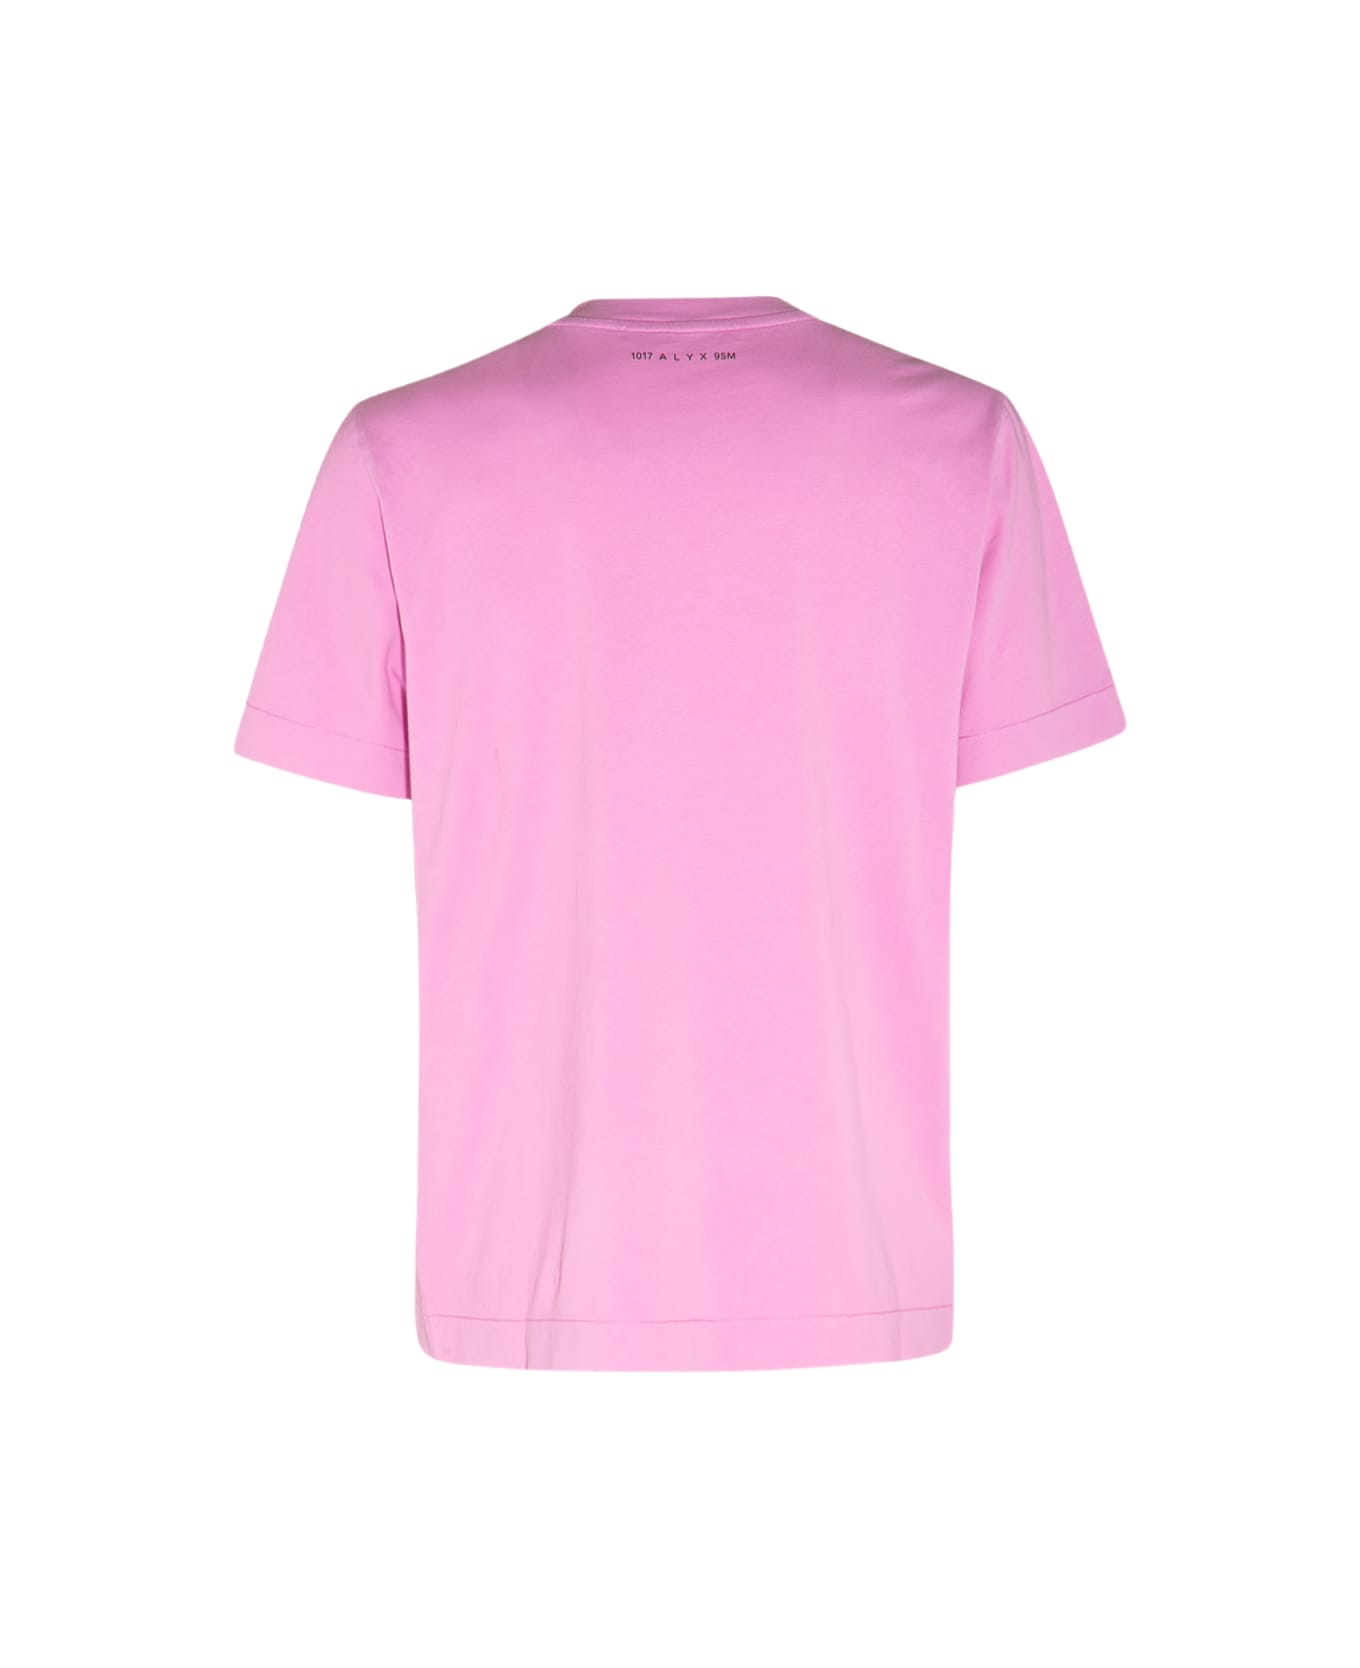 1017 ALYX 9SM Pink Cotton Icon Flower T-shirt - PINK B